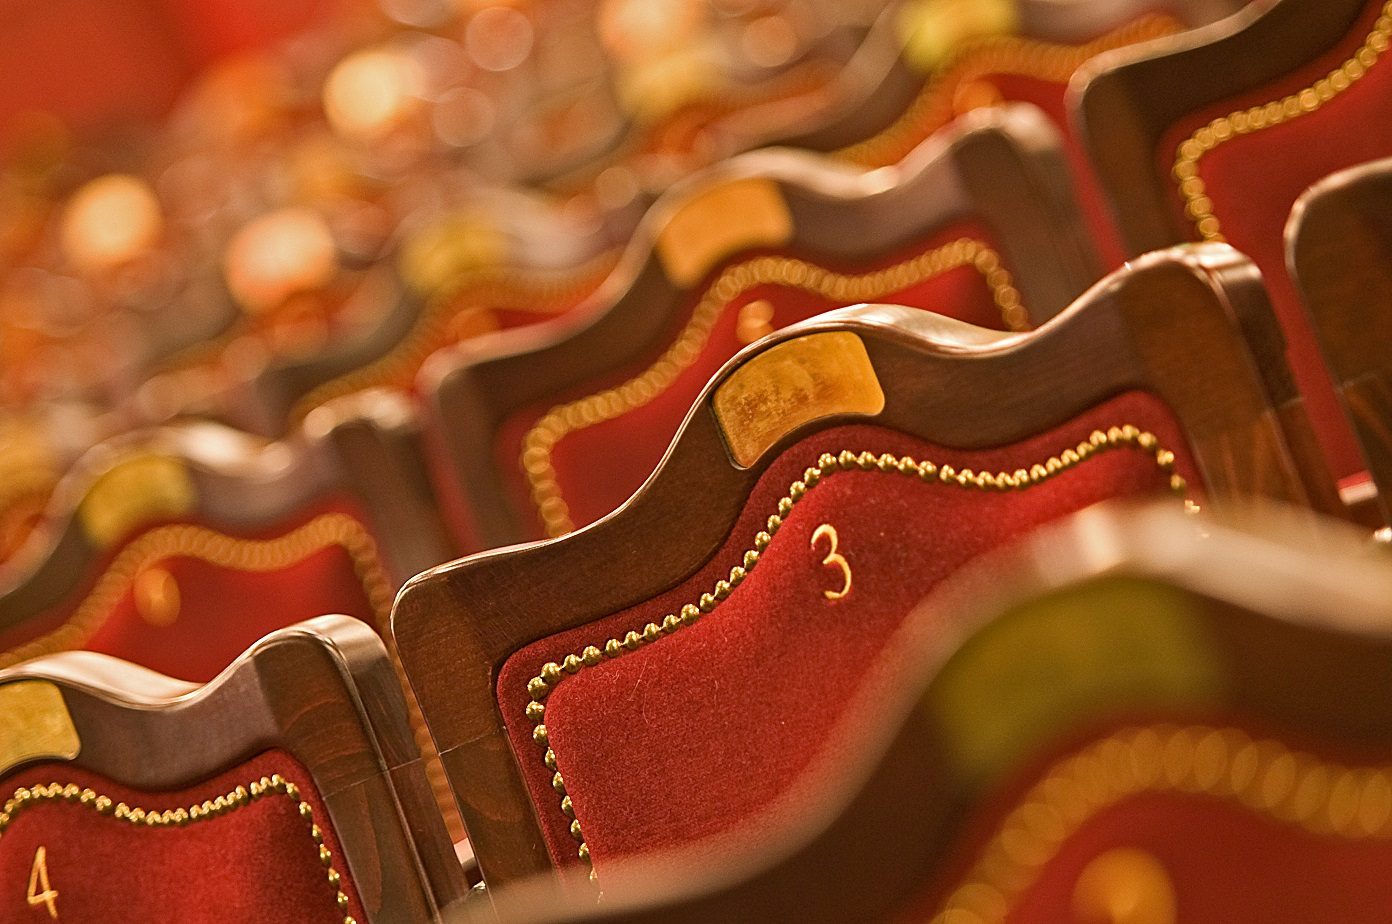 City Varieties auditorium seats in the close up